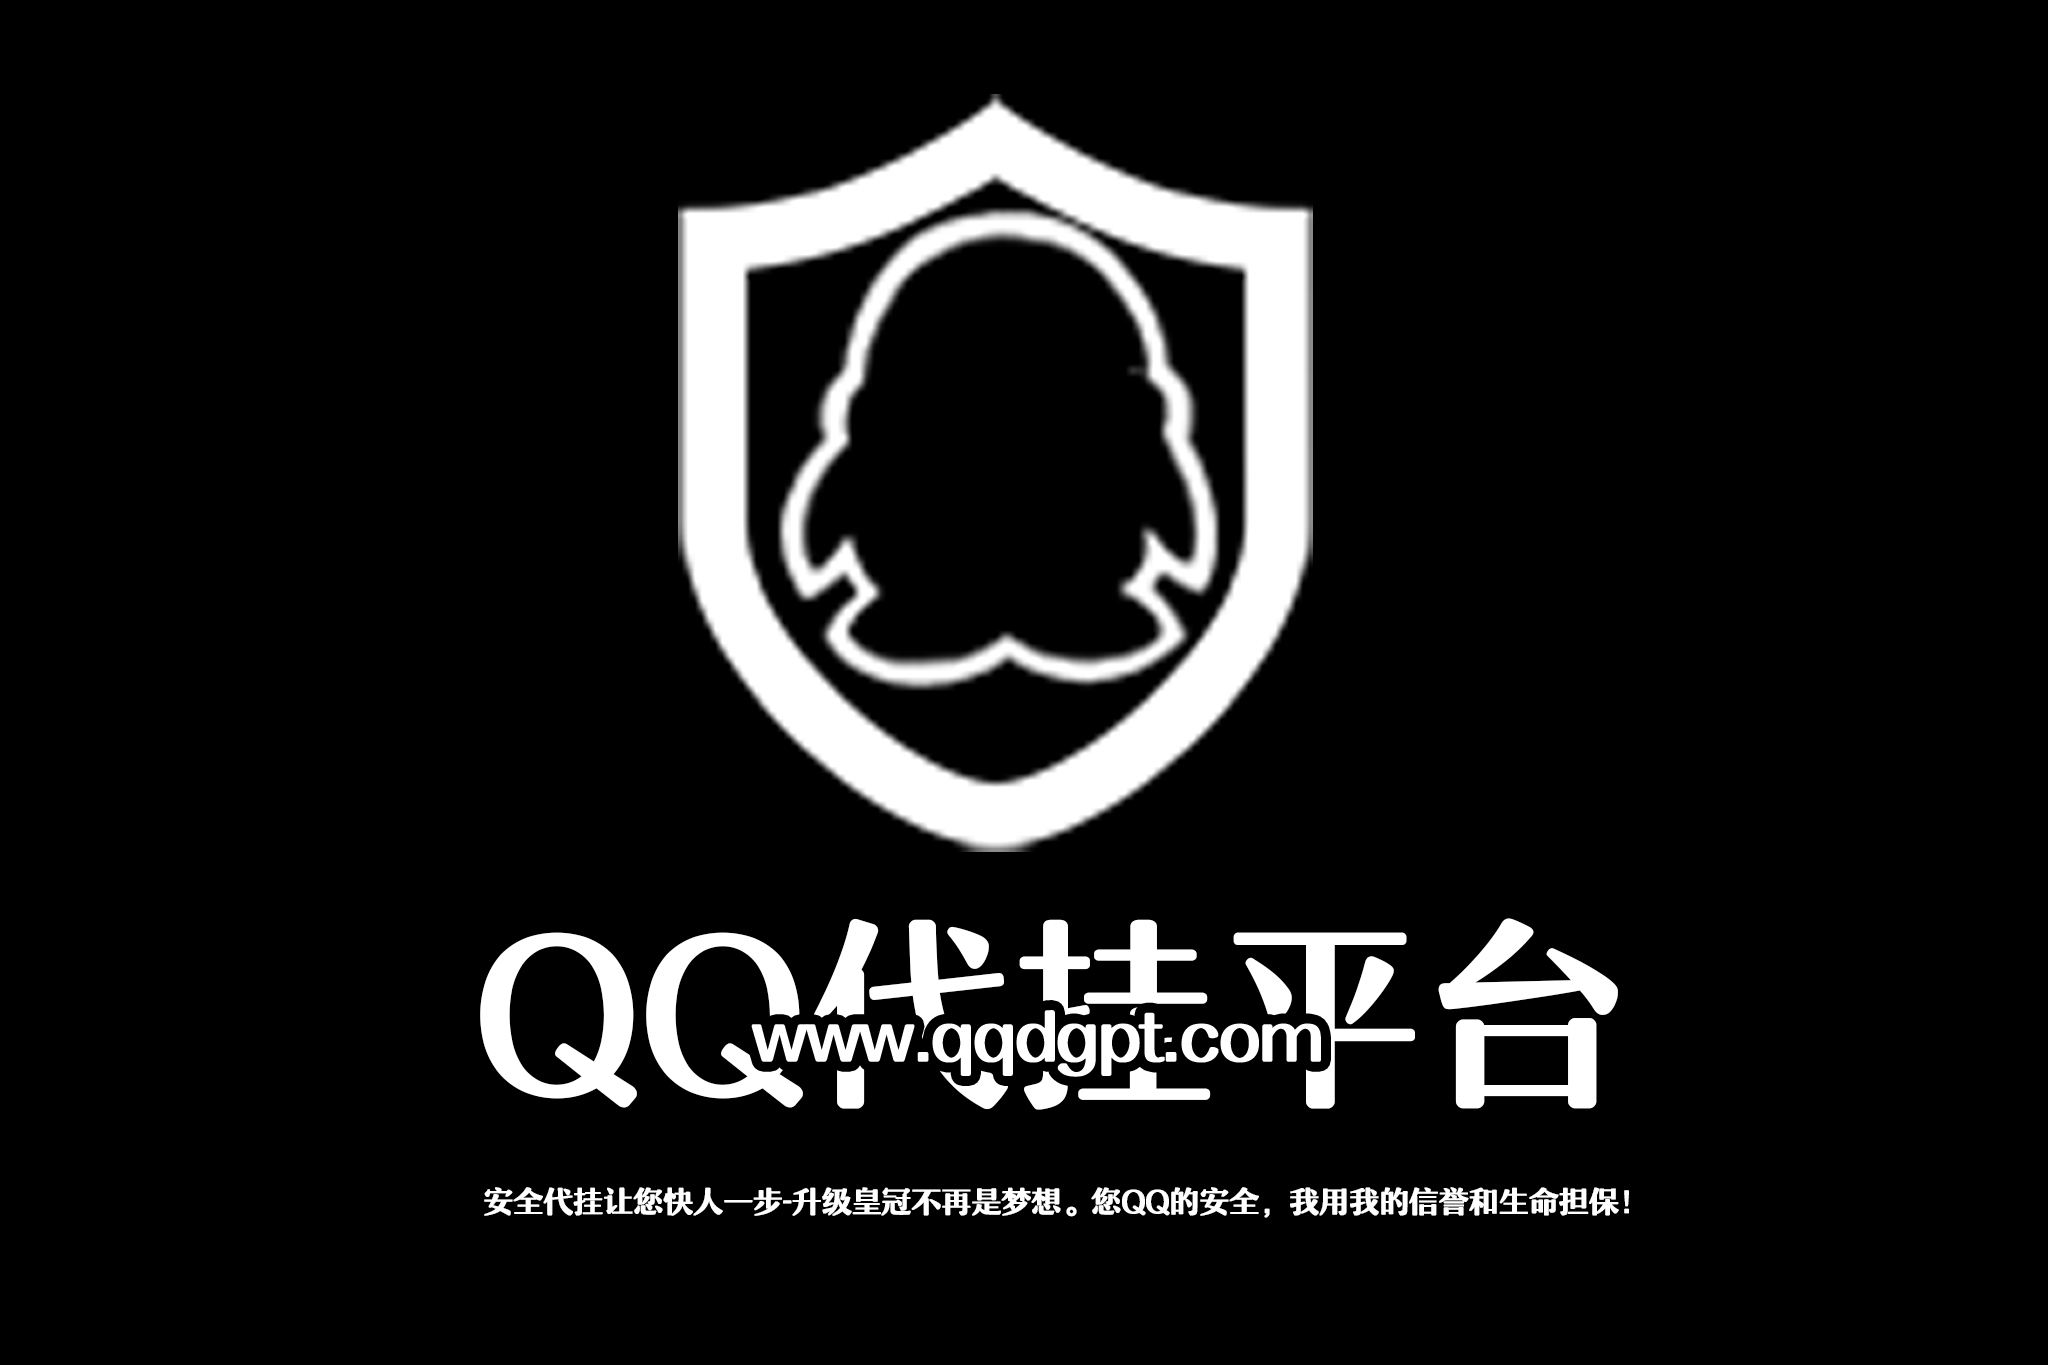 qq全套代挂有多快 – QQ代挂网（www.qqdgpt.com）-QQ代挂博客网